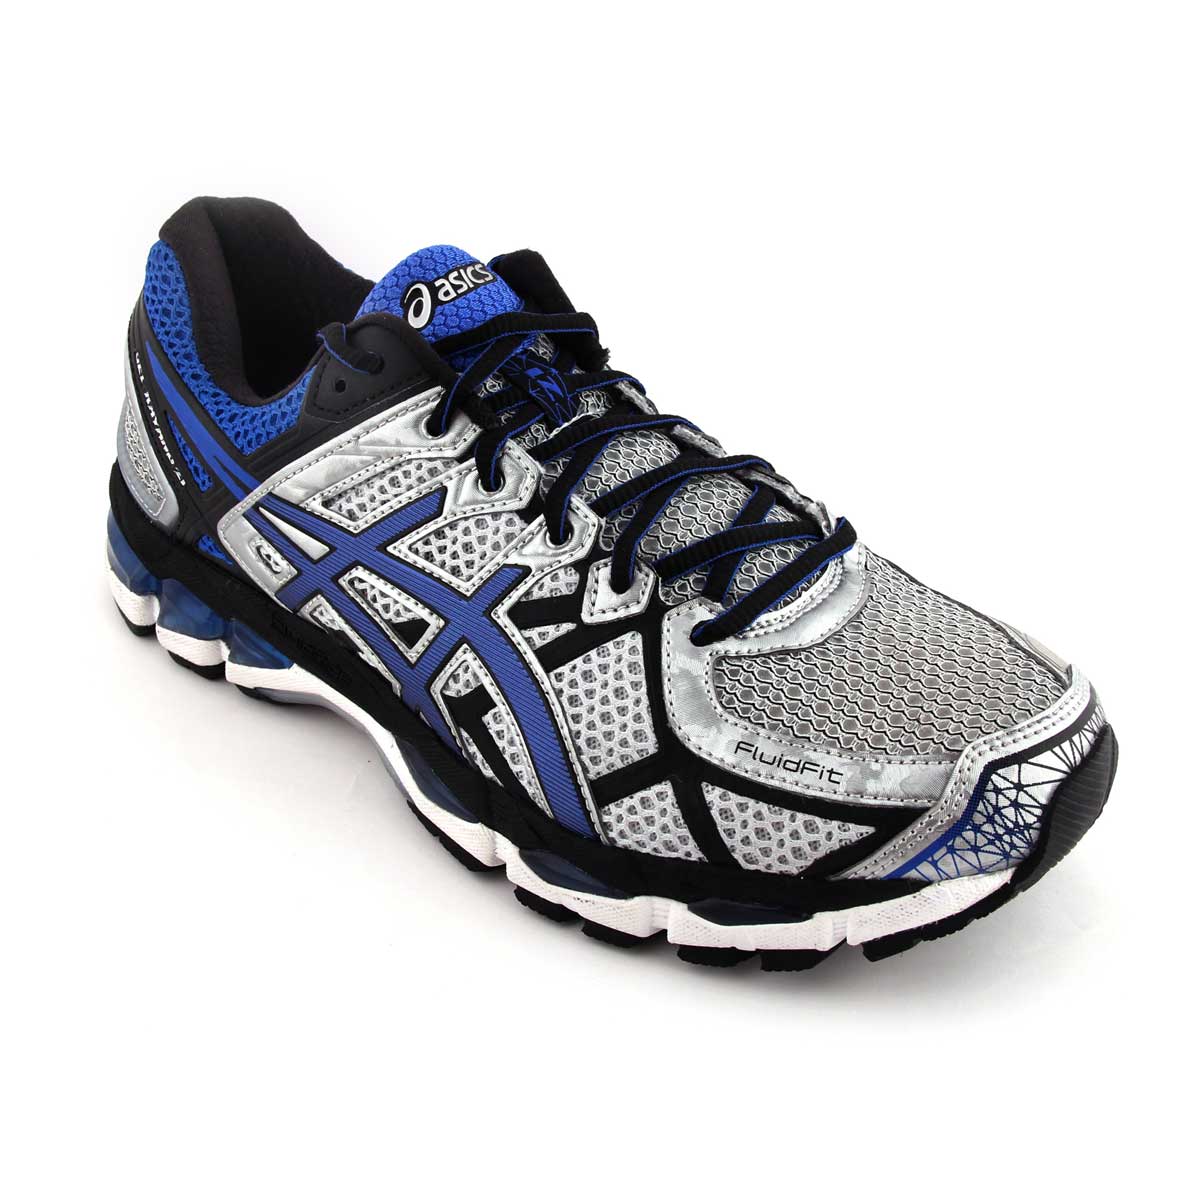 Buy Asics Gel-Kayano 21 Men's Running Shoes (Lightning/Royal) Online